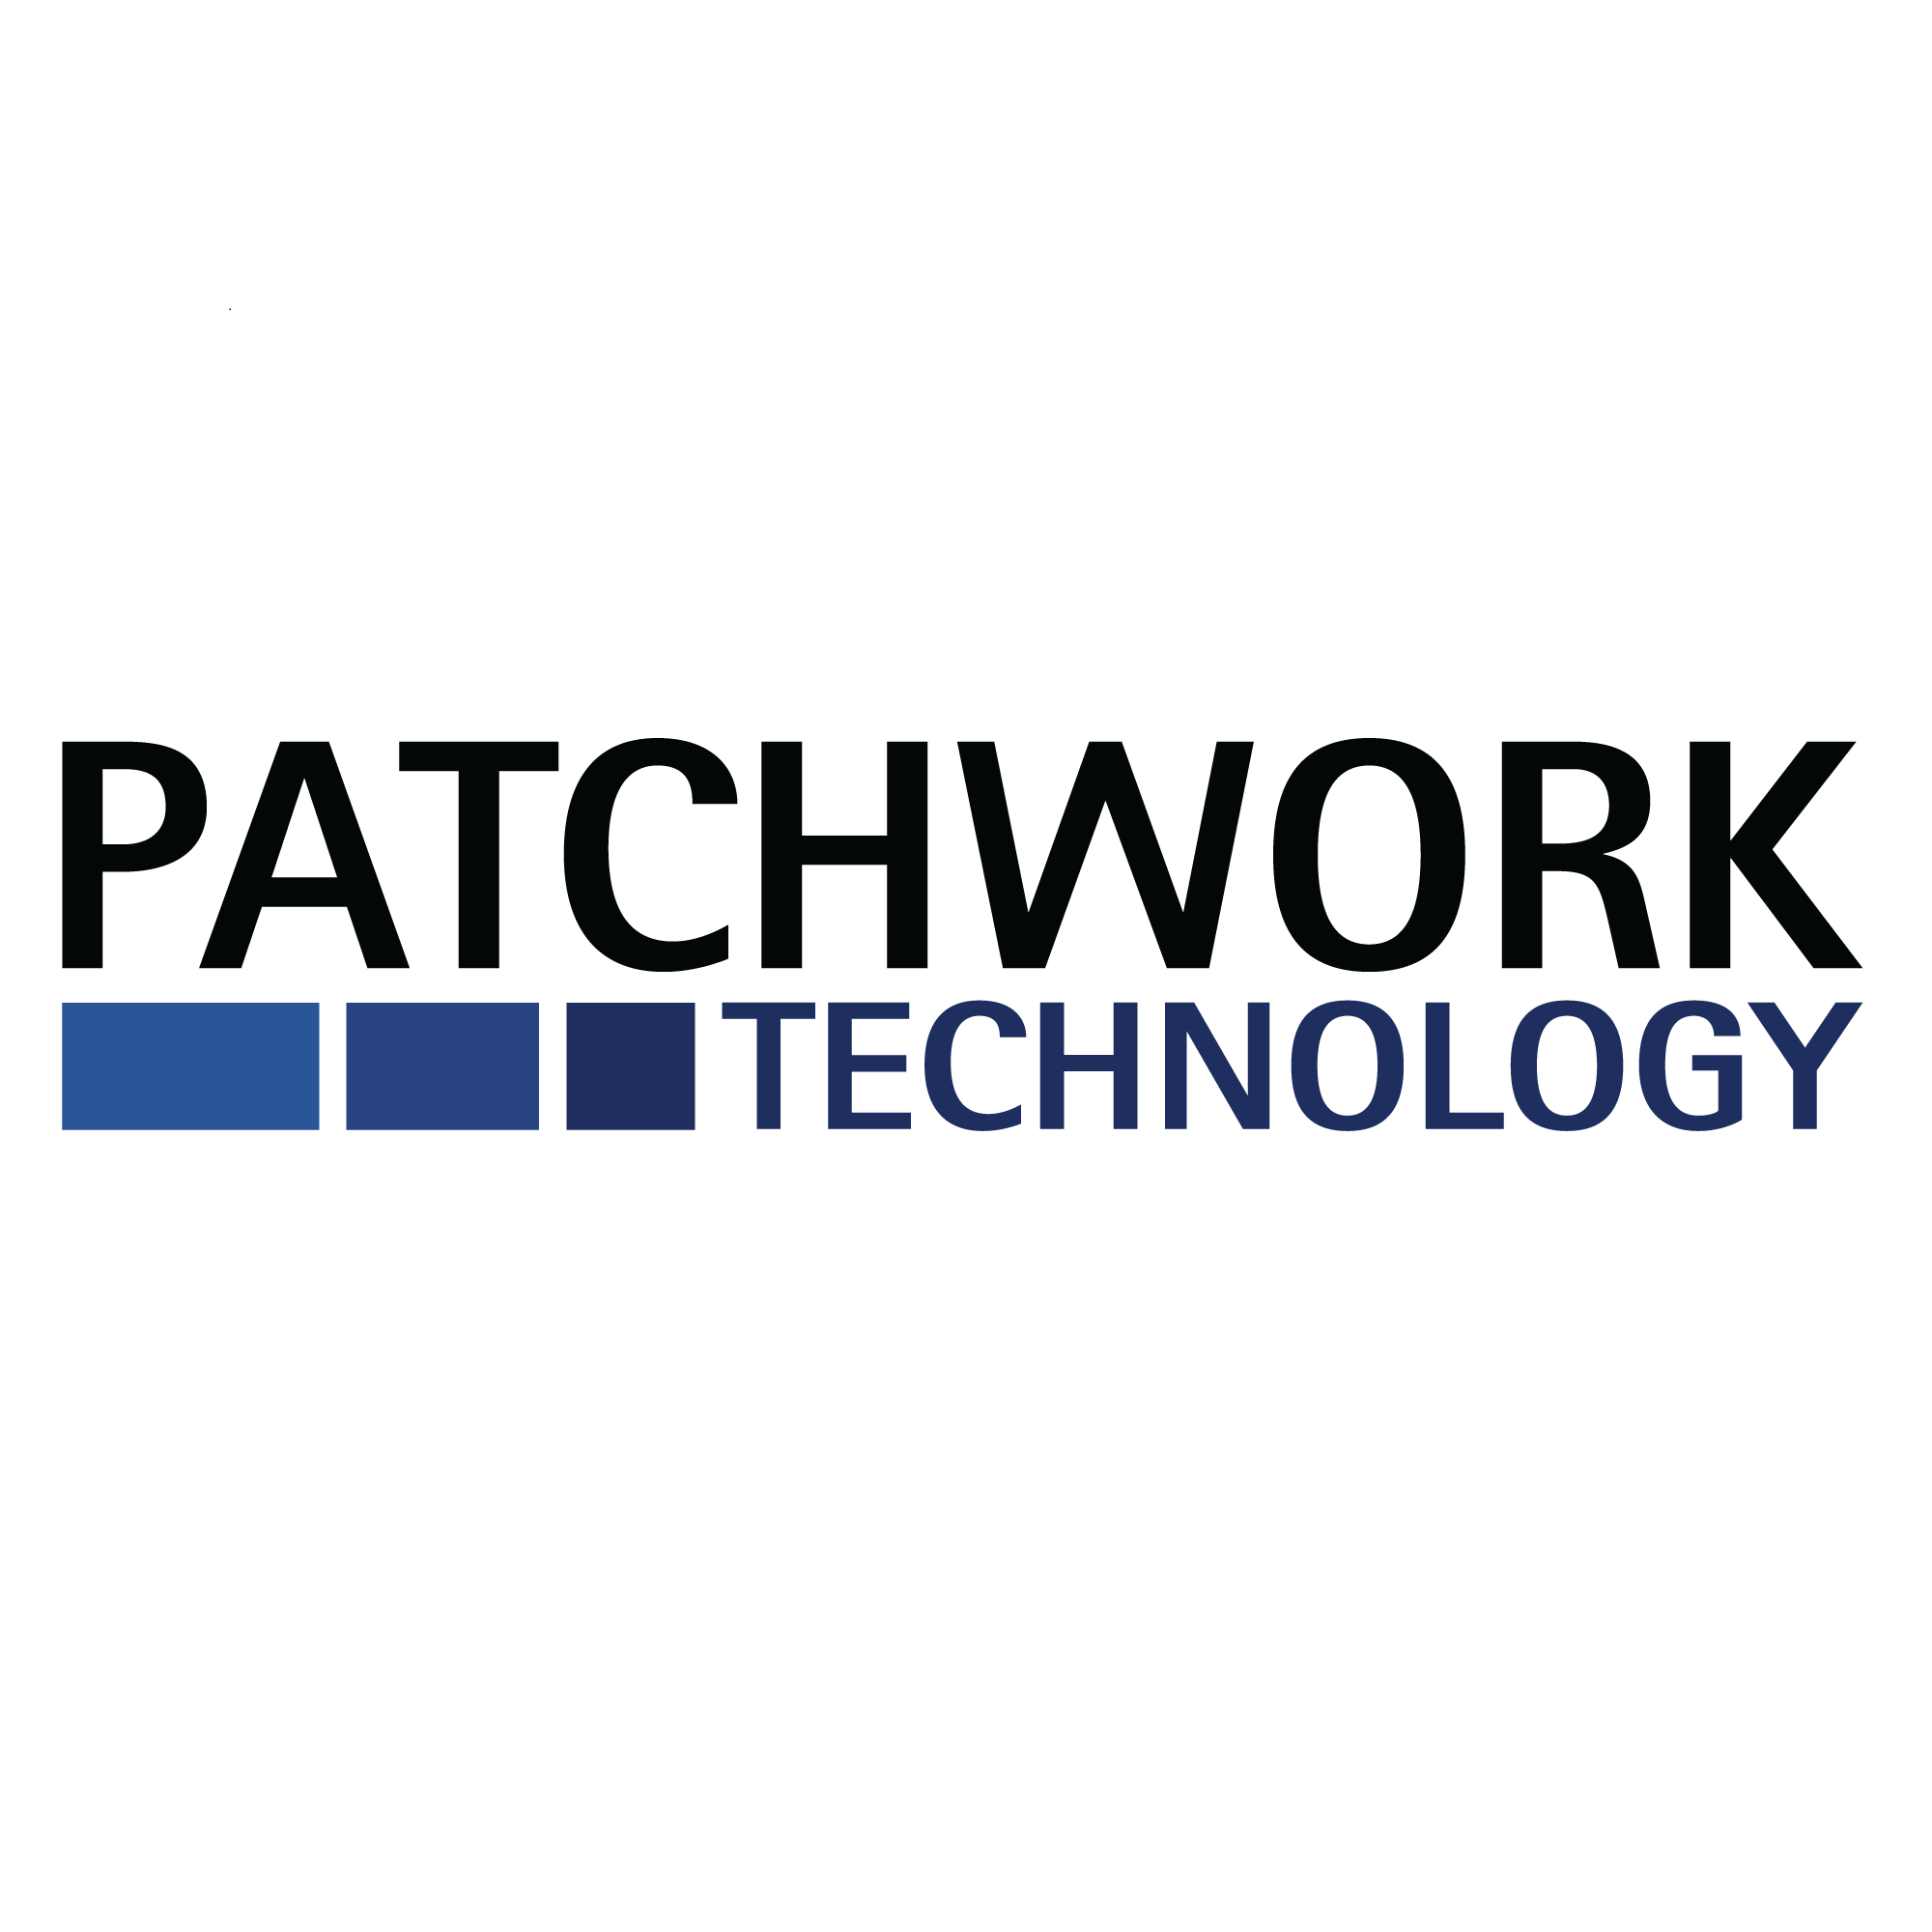 Patchwork Technology Ltd